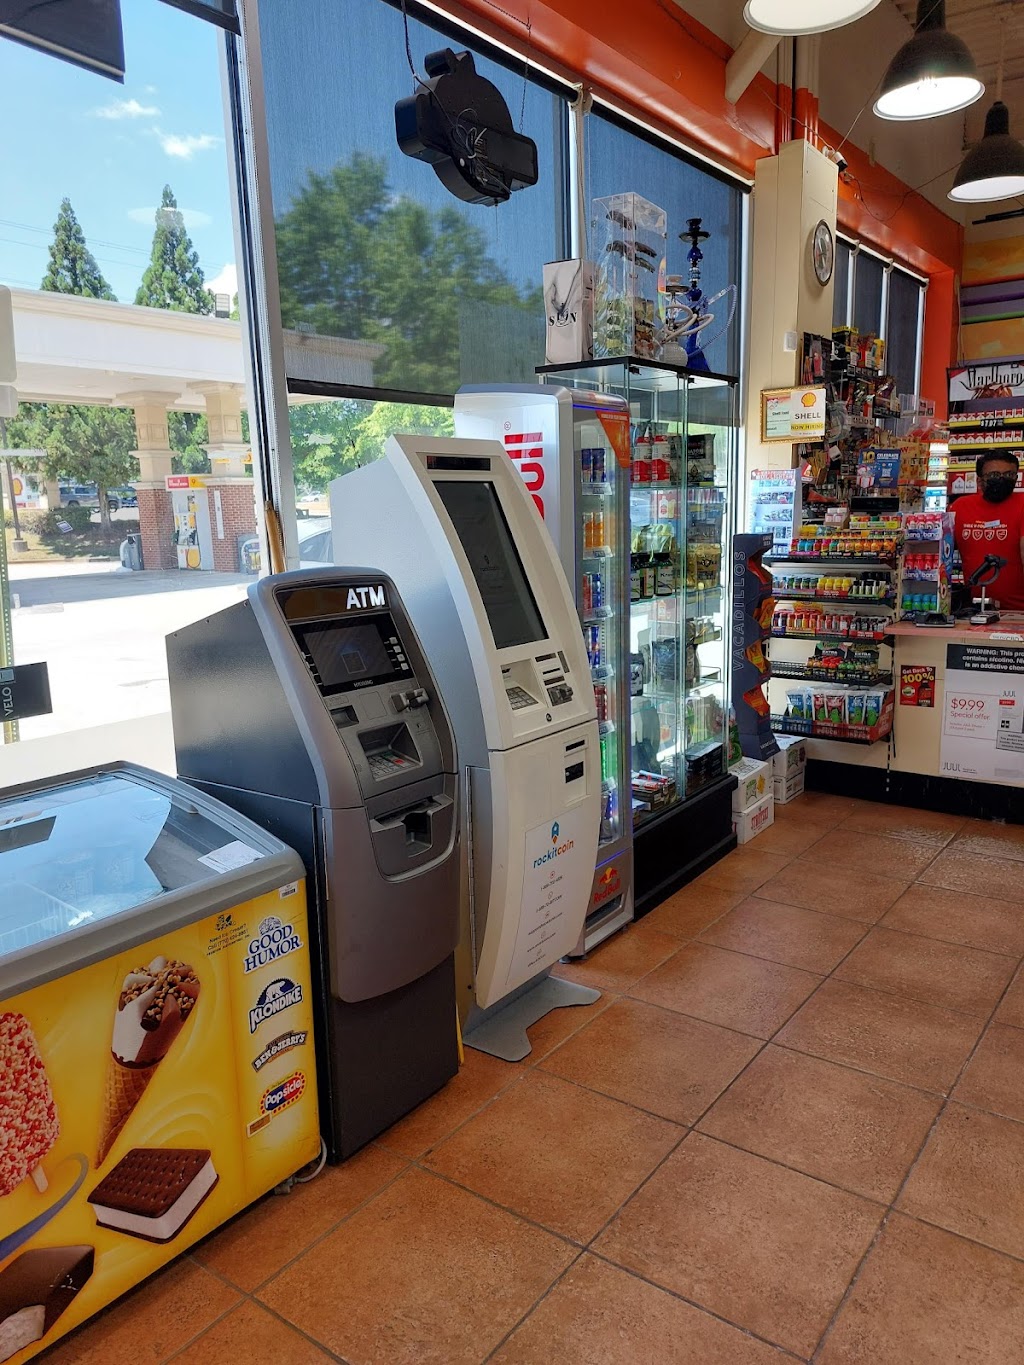 RockItCoin Bitcoin ATM | 1739 Buford Hwy, Cumming, GA 30041, USA | Phone: (888) 702-4826